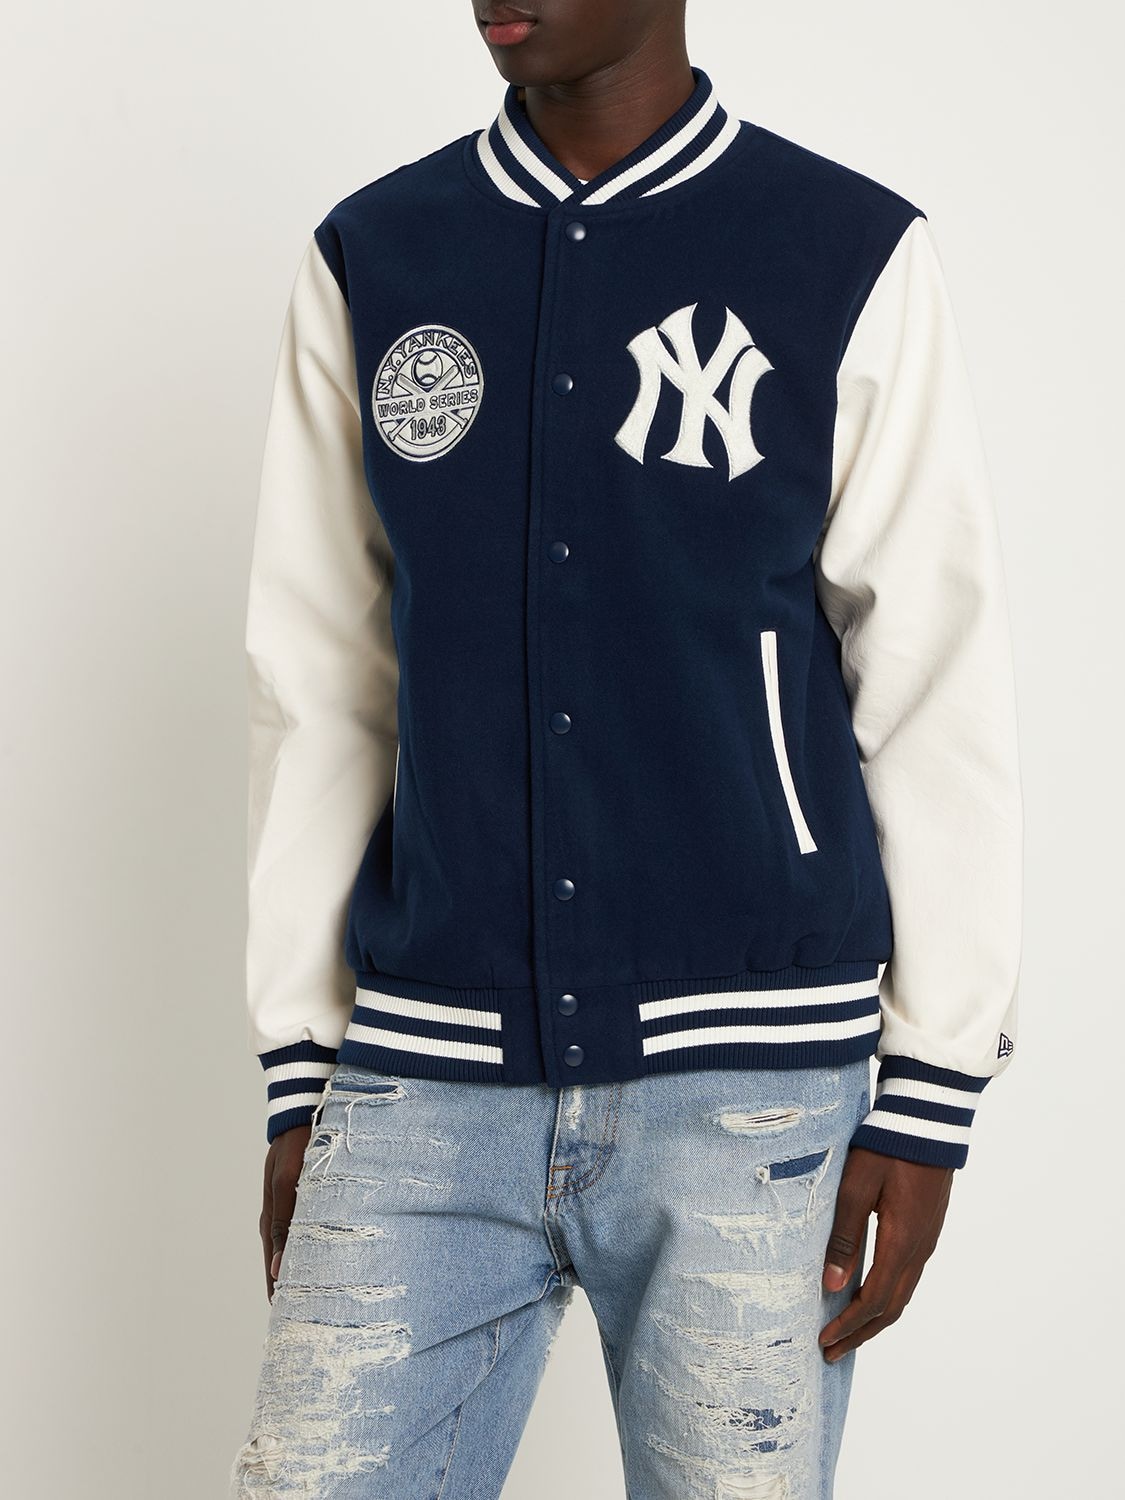 New York Yankees World Series Jacket